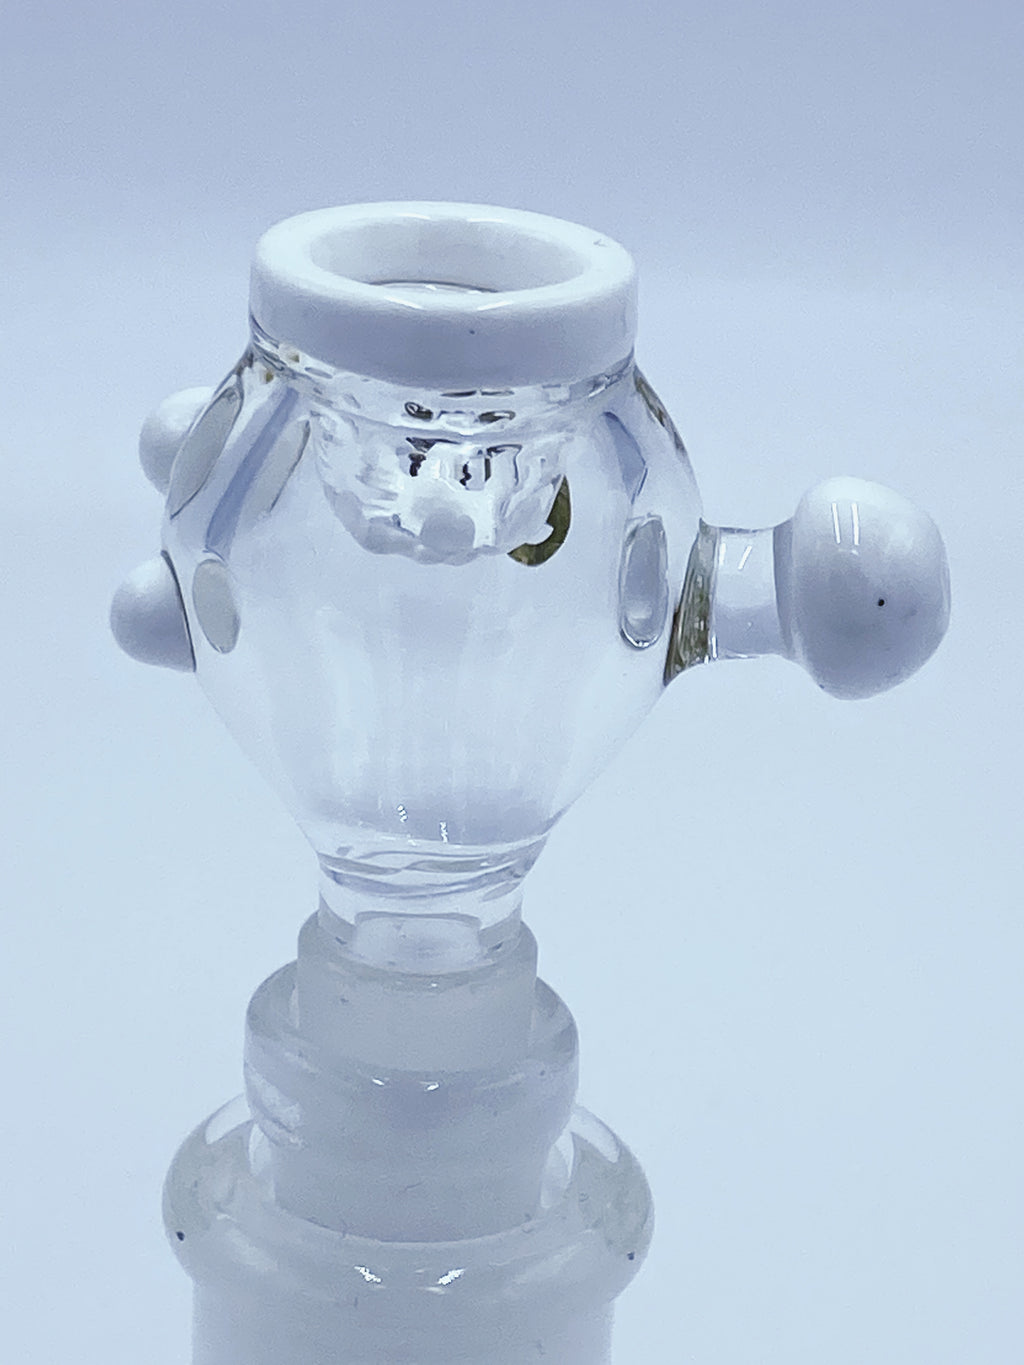 Cheech Glass 14mm White Screen Conic Bowl